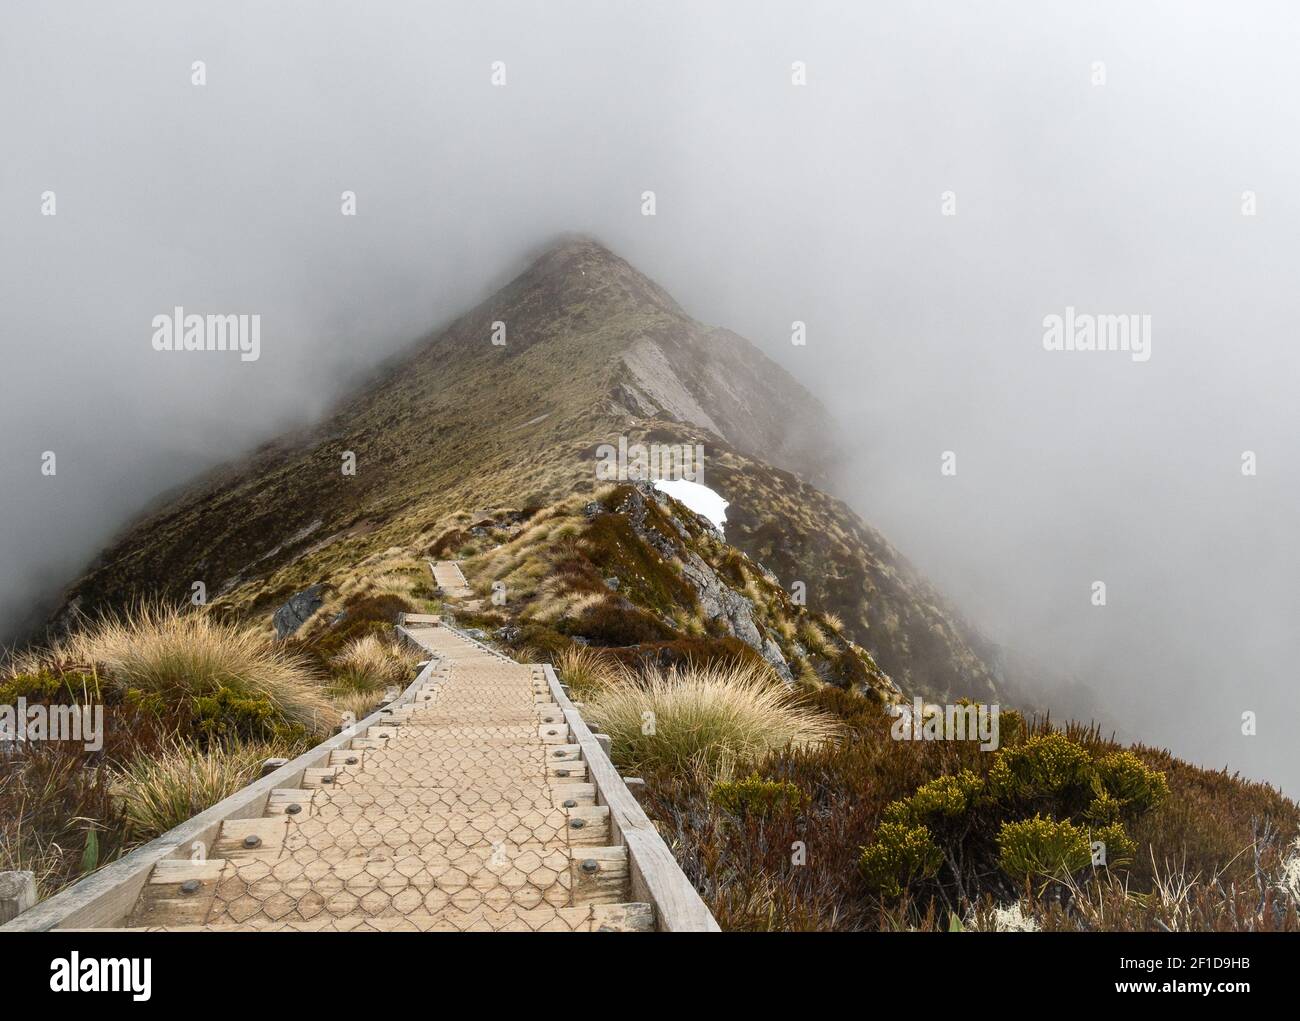 Wooden pathway leading through mountain ridgeline shrouded by fog, shot at Kepler Track, Fiordland National Park, New Zealand Stock Photo